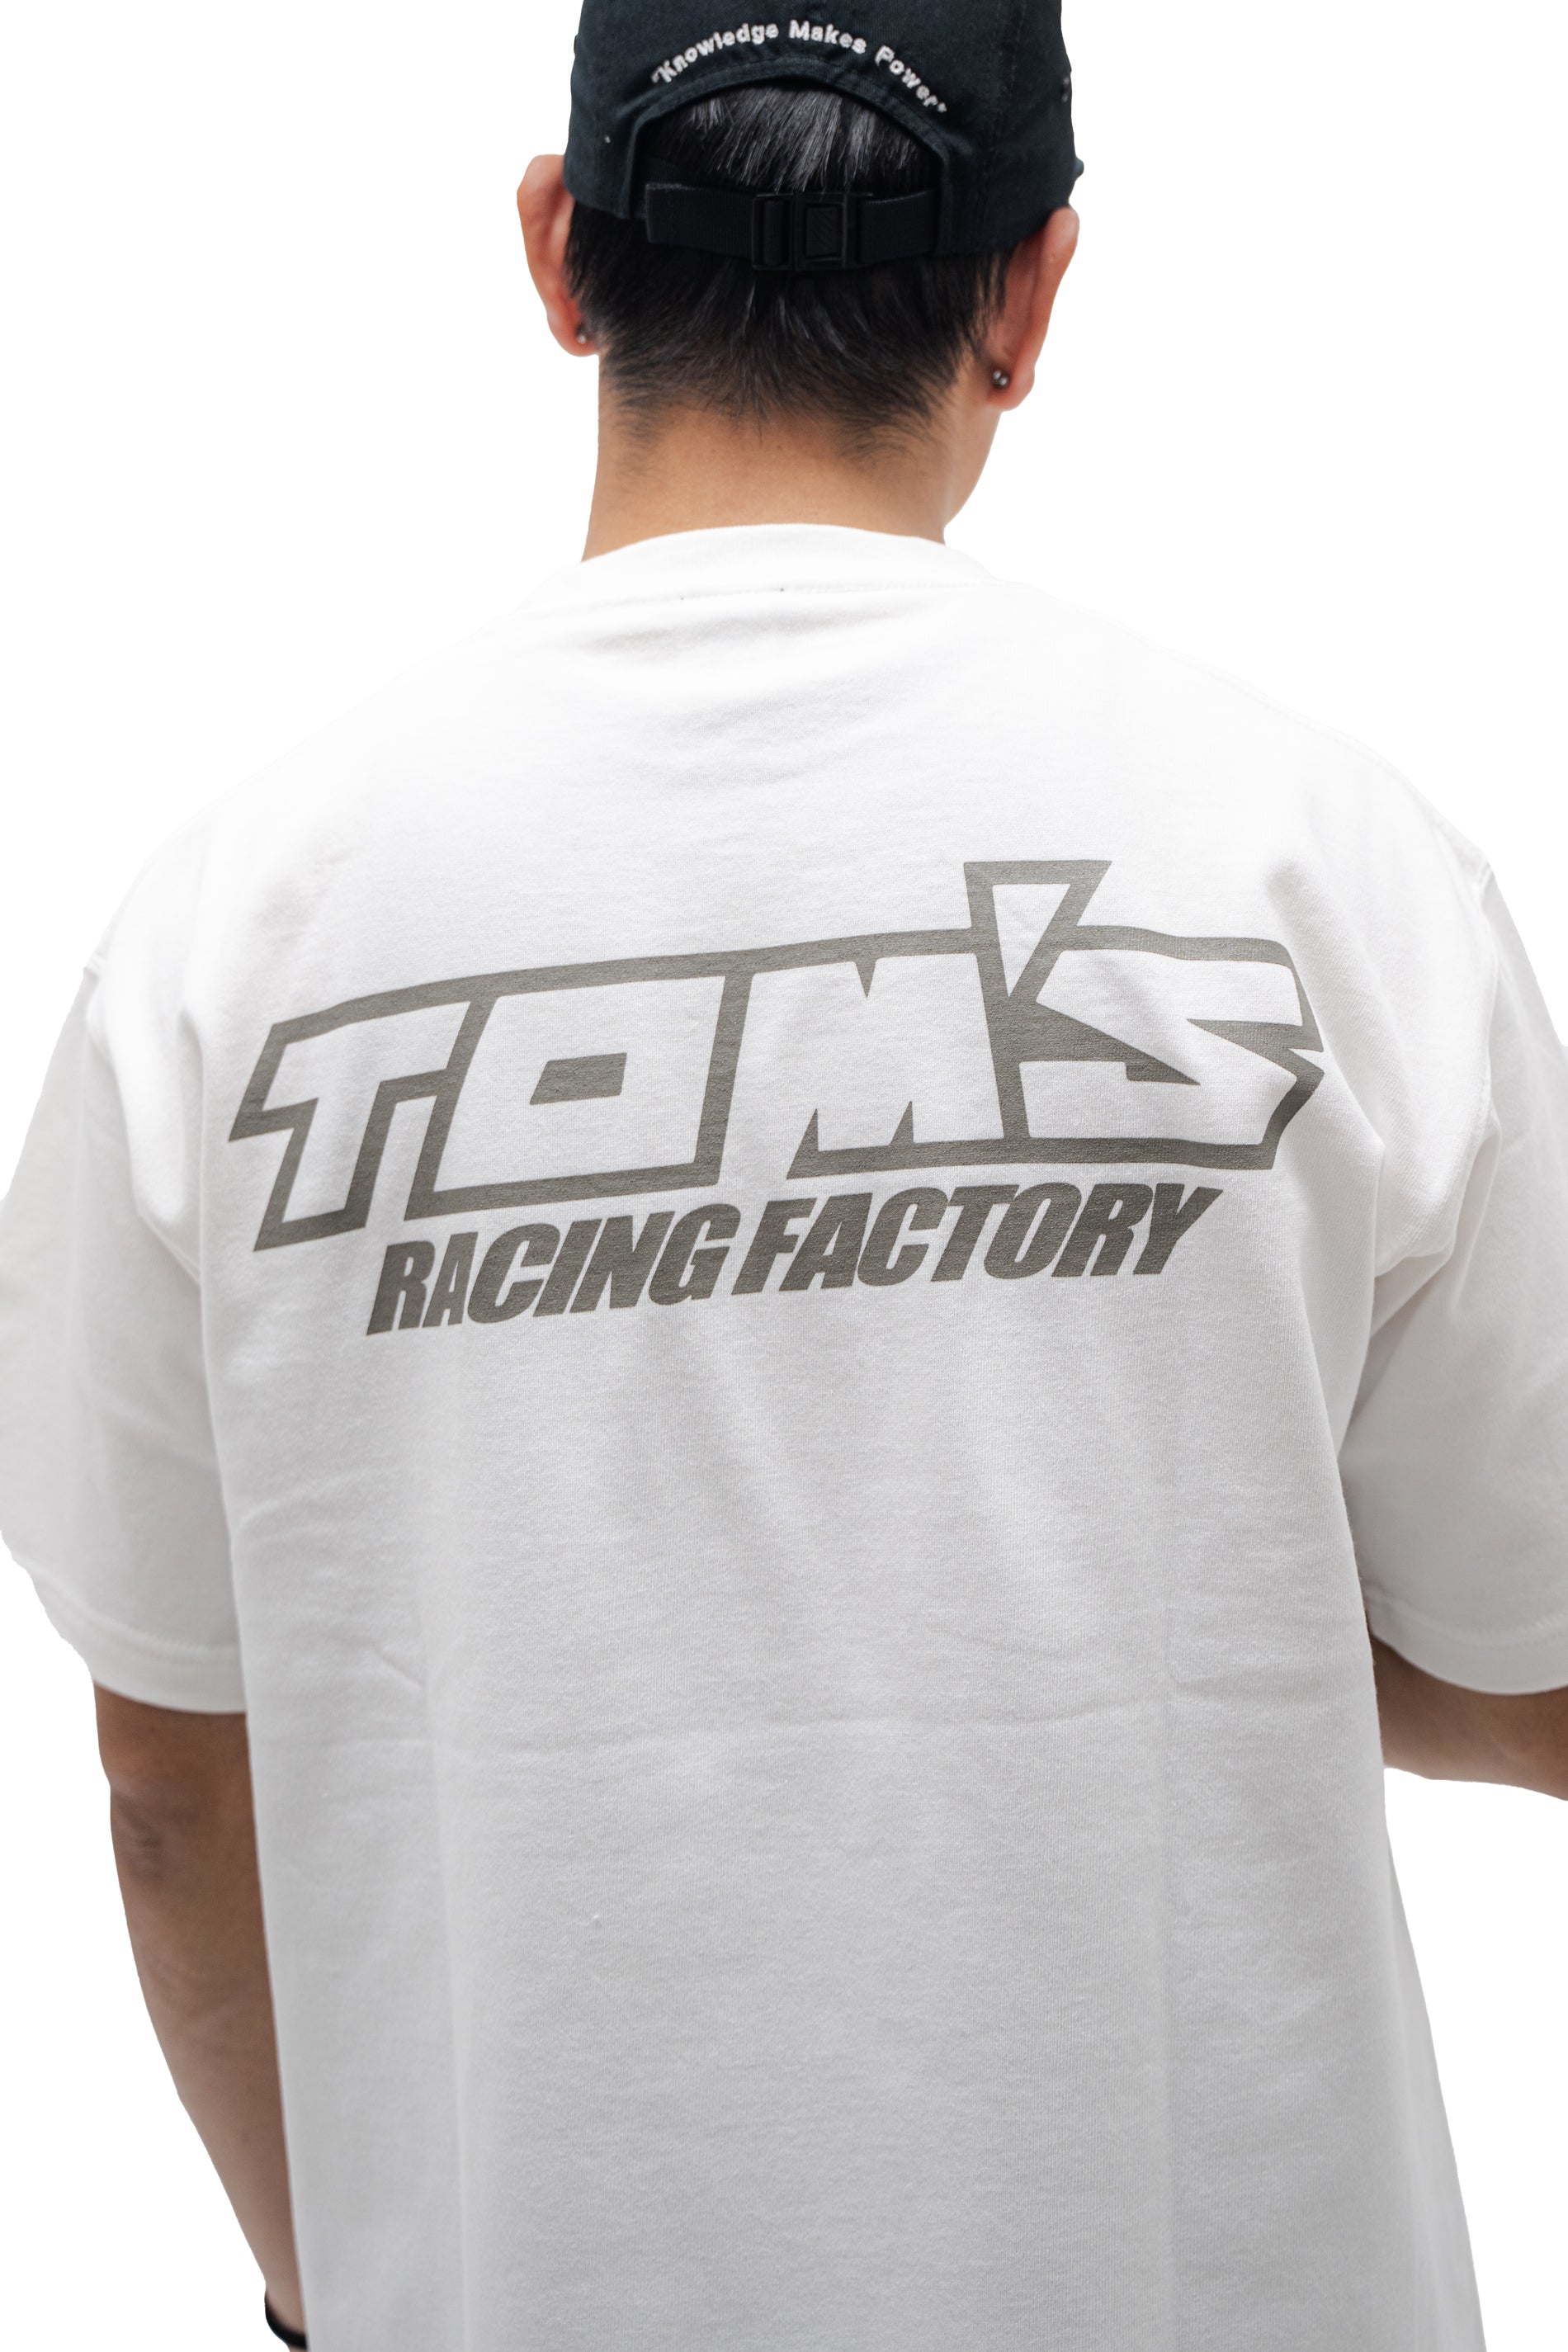 TOM'S Racing -49th Anniversary Racing Factory Oversized T-Shirt-4